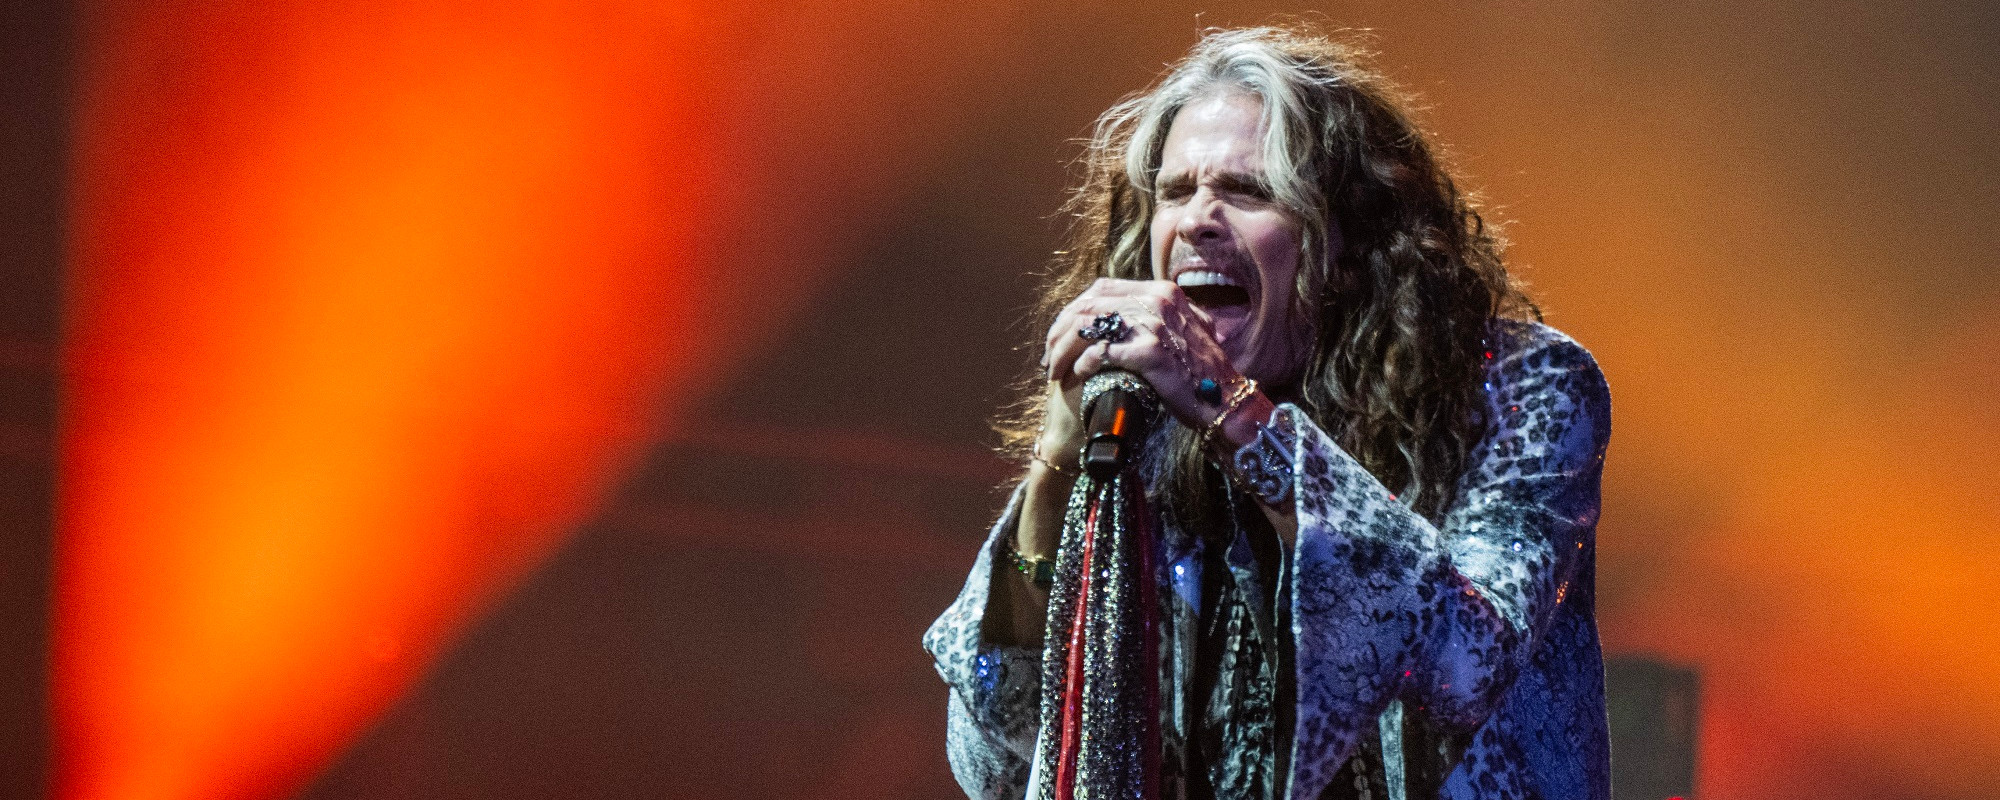 Aerosmith’s Steven Tyler Shares Update on Throat Issues; Reveals He’s Pivoting Musical Focus